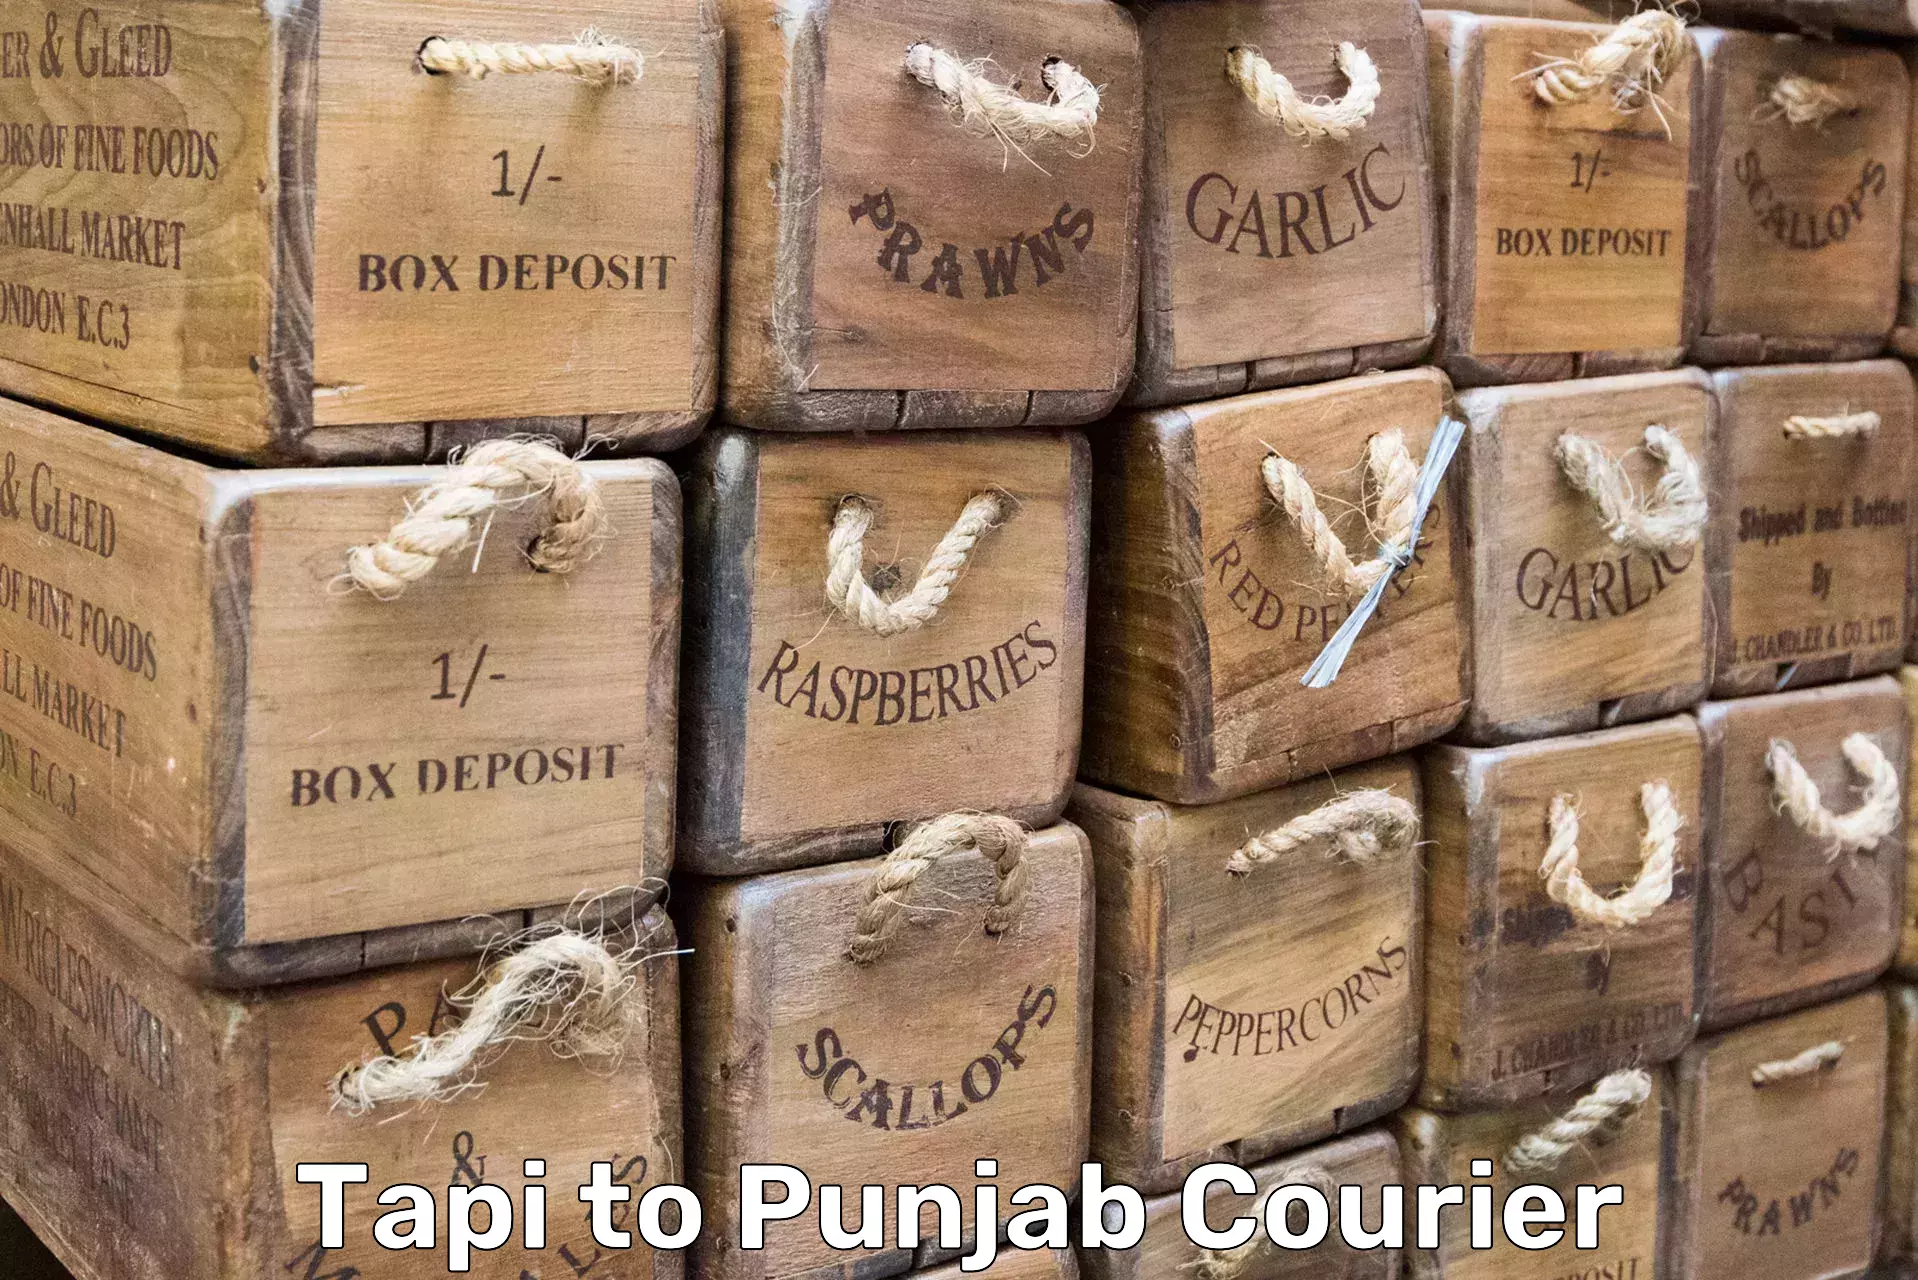 Efficient moving company Tapi to Punjab